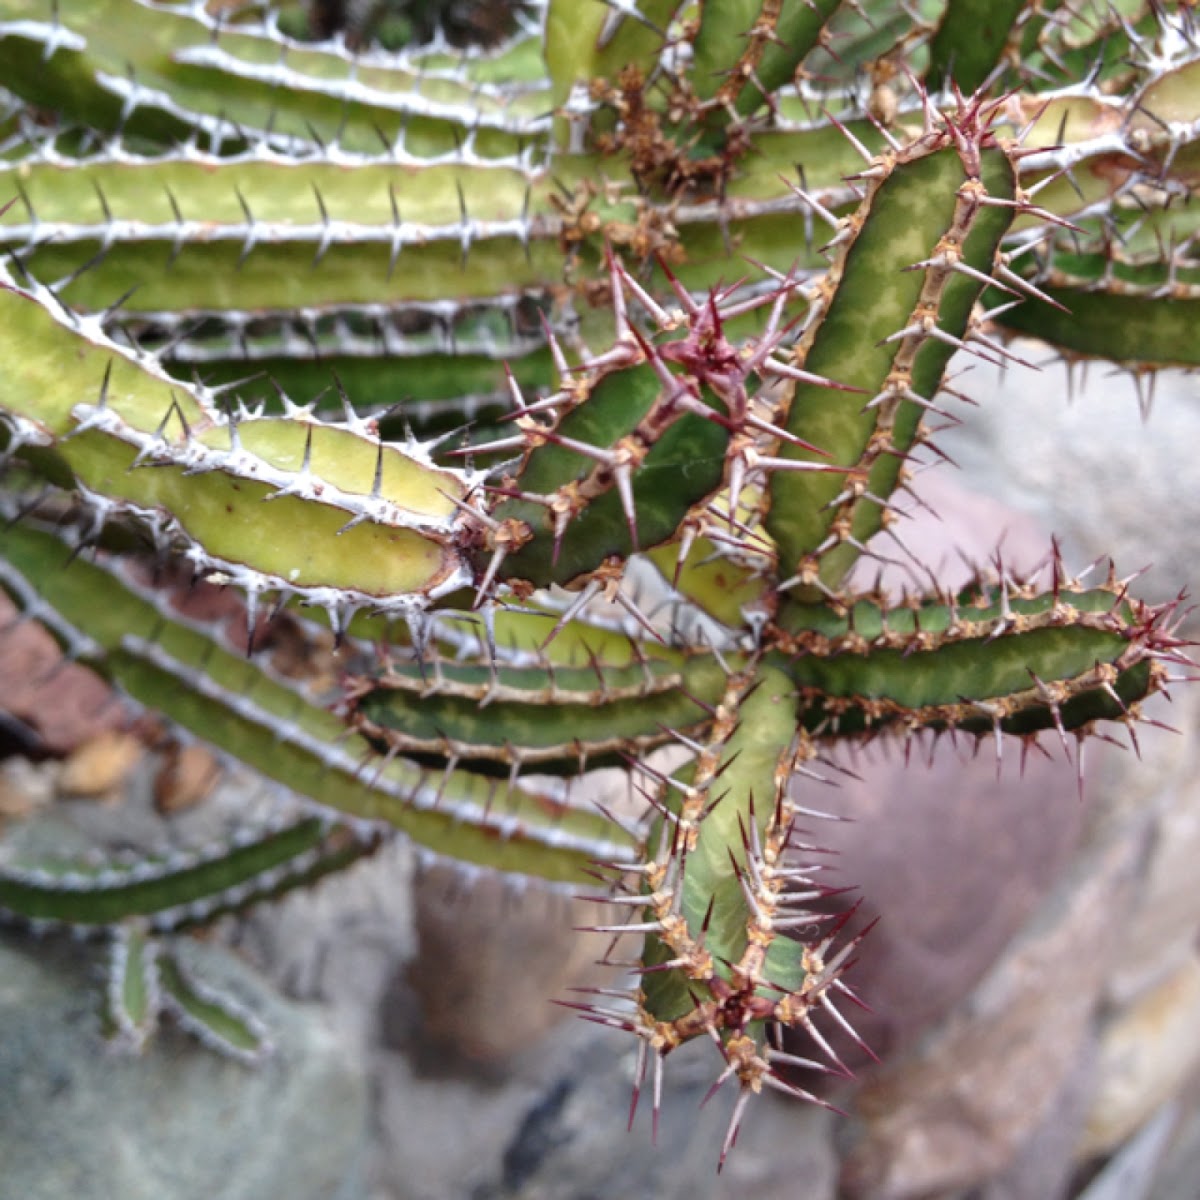 Spurge Cacti